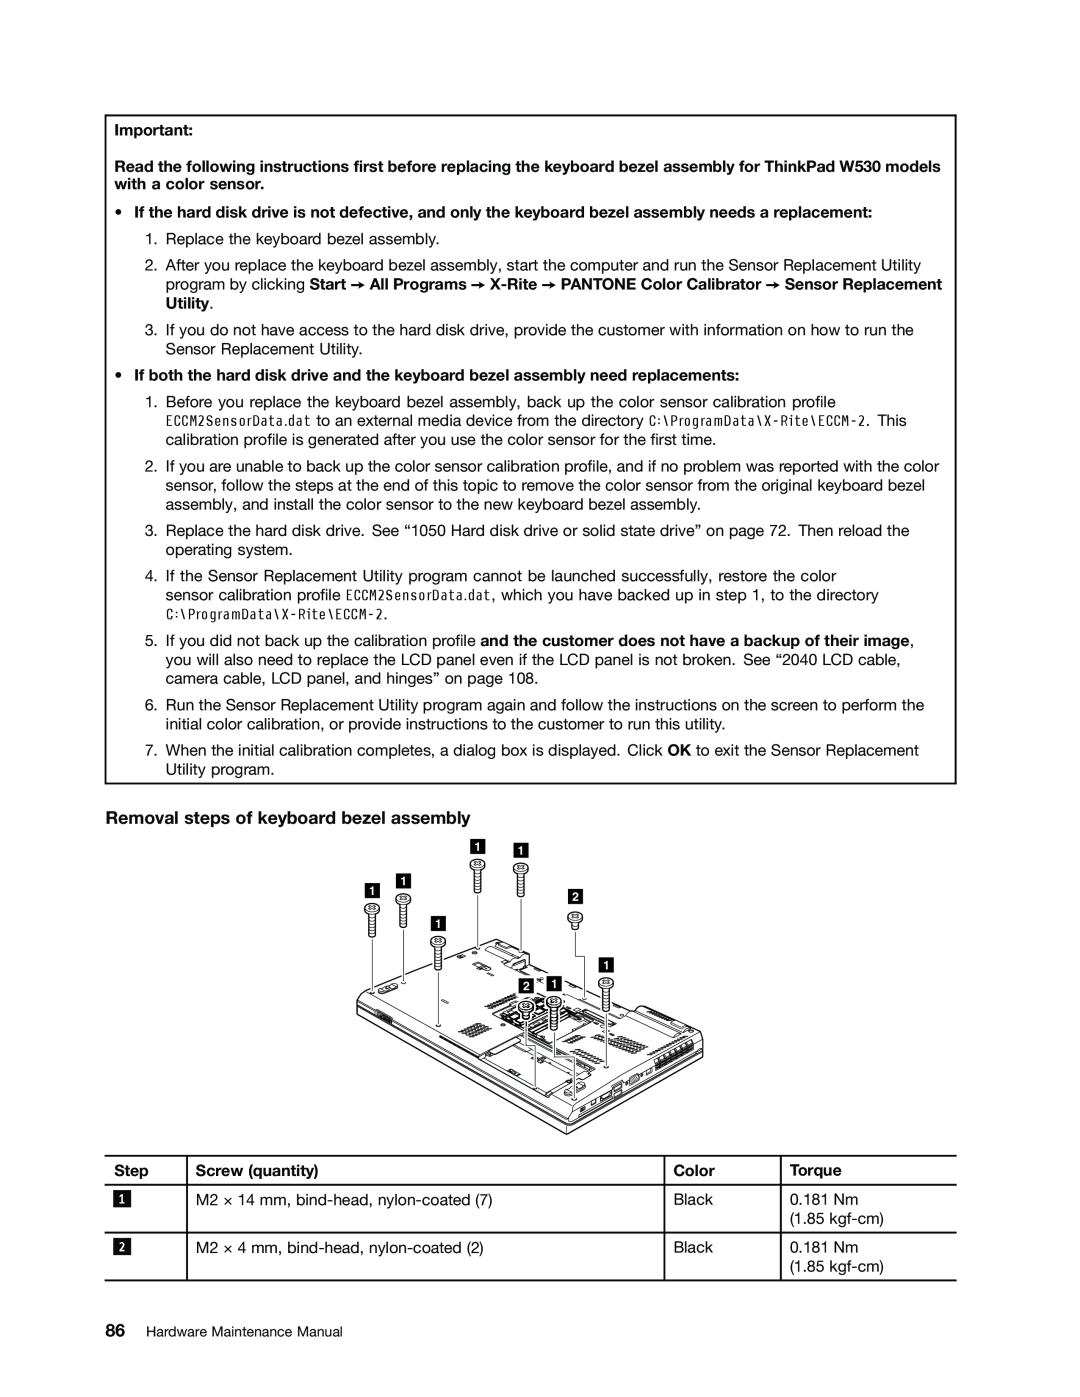 Lenovo W530, T530i, 2394F1U, 244723U manual Removal steps of keyboard bezel assembly, Hardware Maintenance Manual 